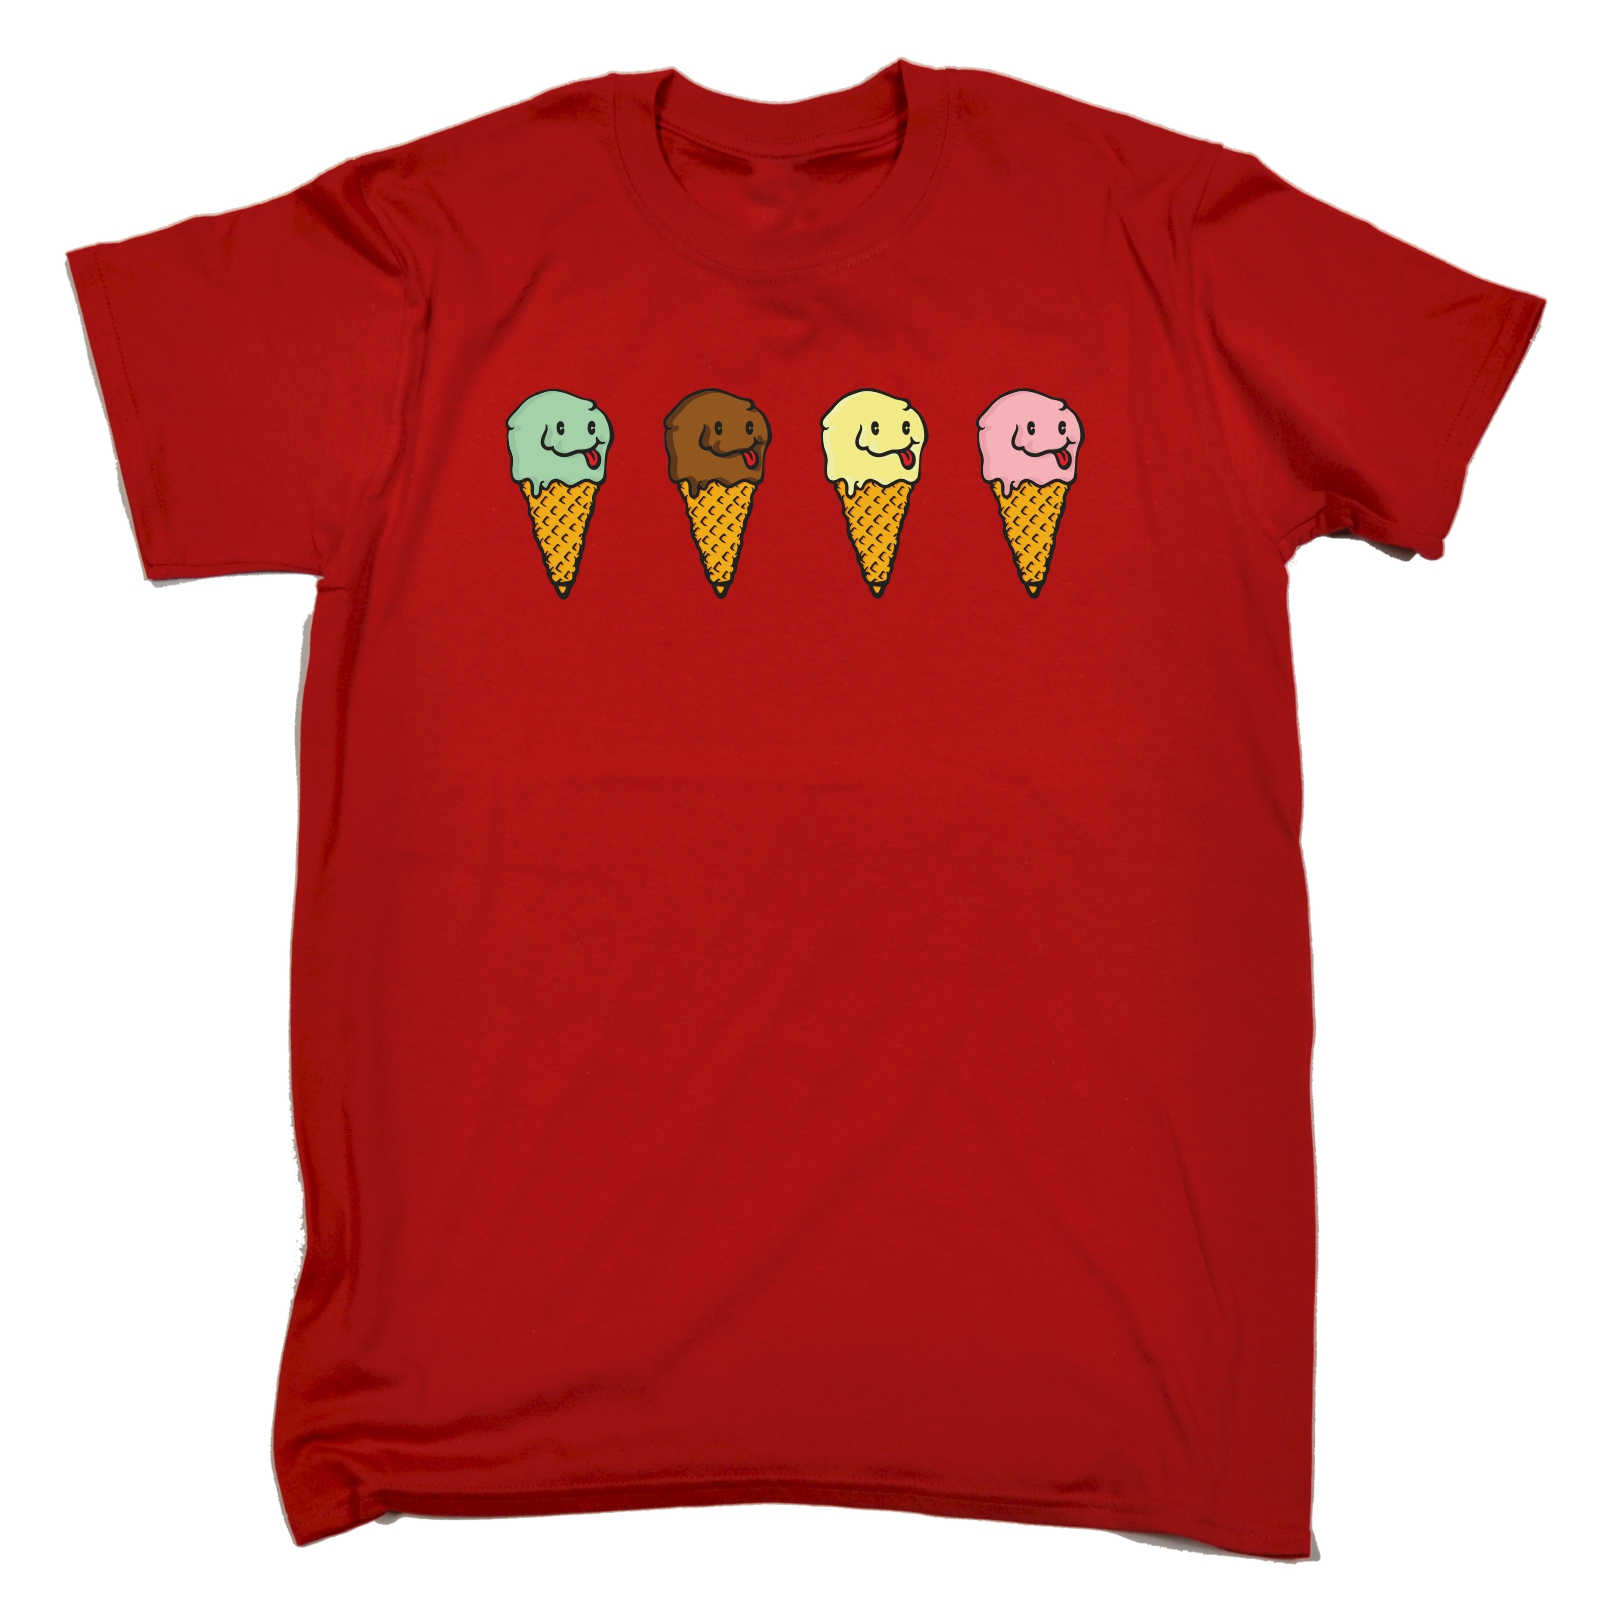 4 Cheeky Ice Creams MENS T-SHIRT tee birthday gift present summer funny fashion 